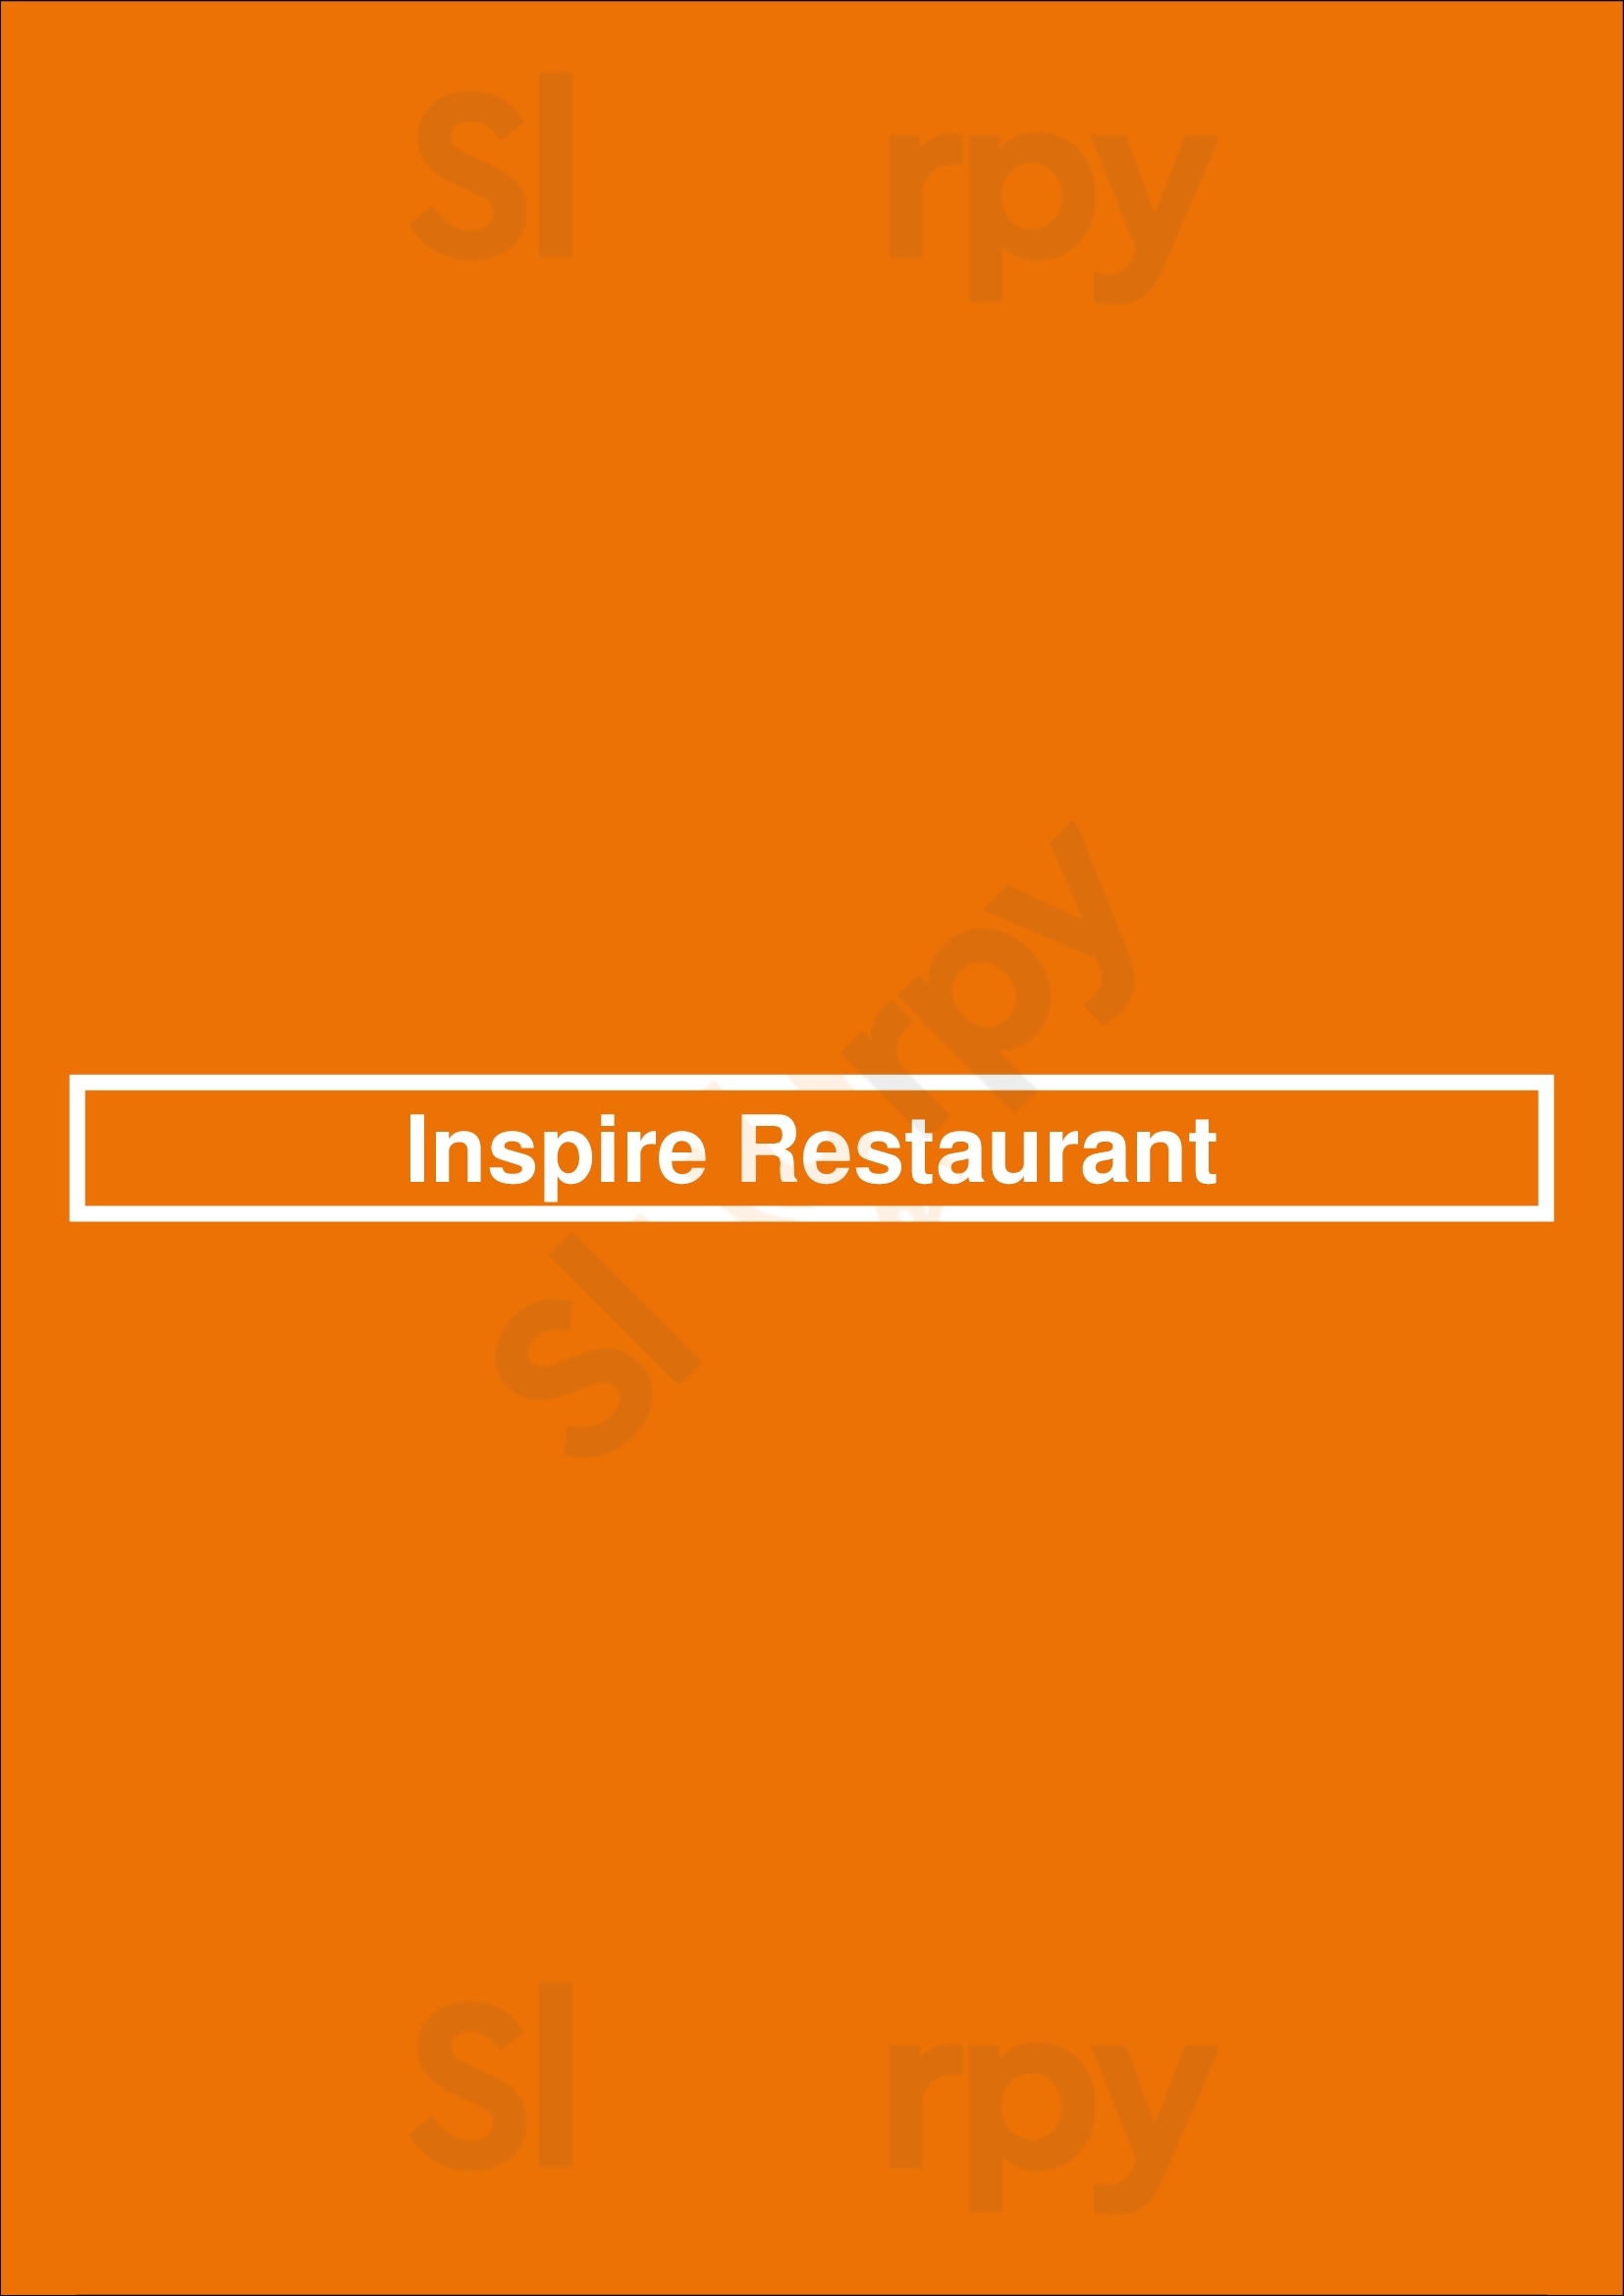 Inspire Restaurant Markham Menu - 1